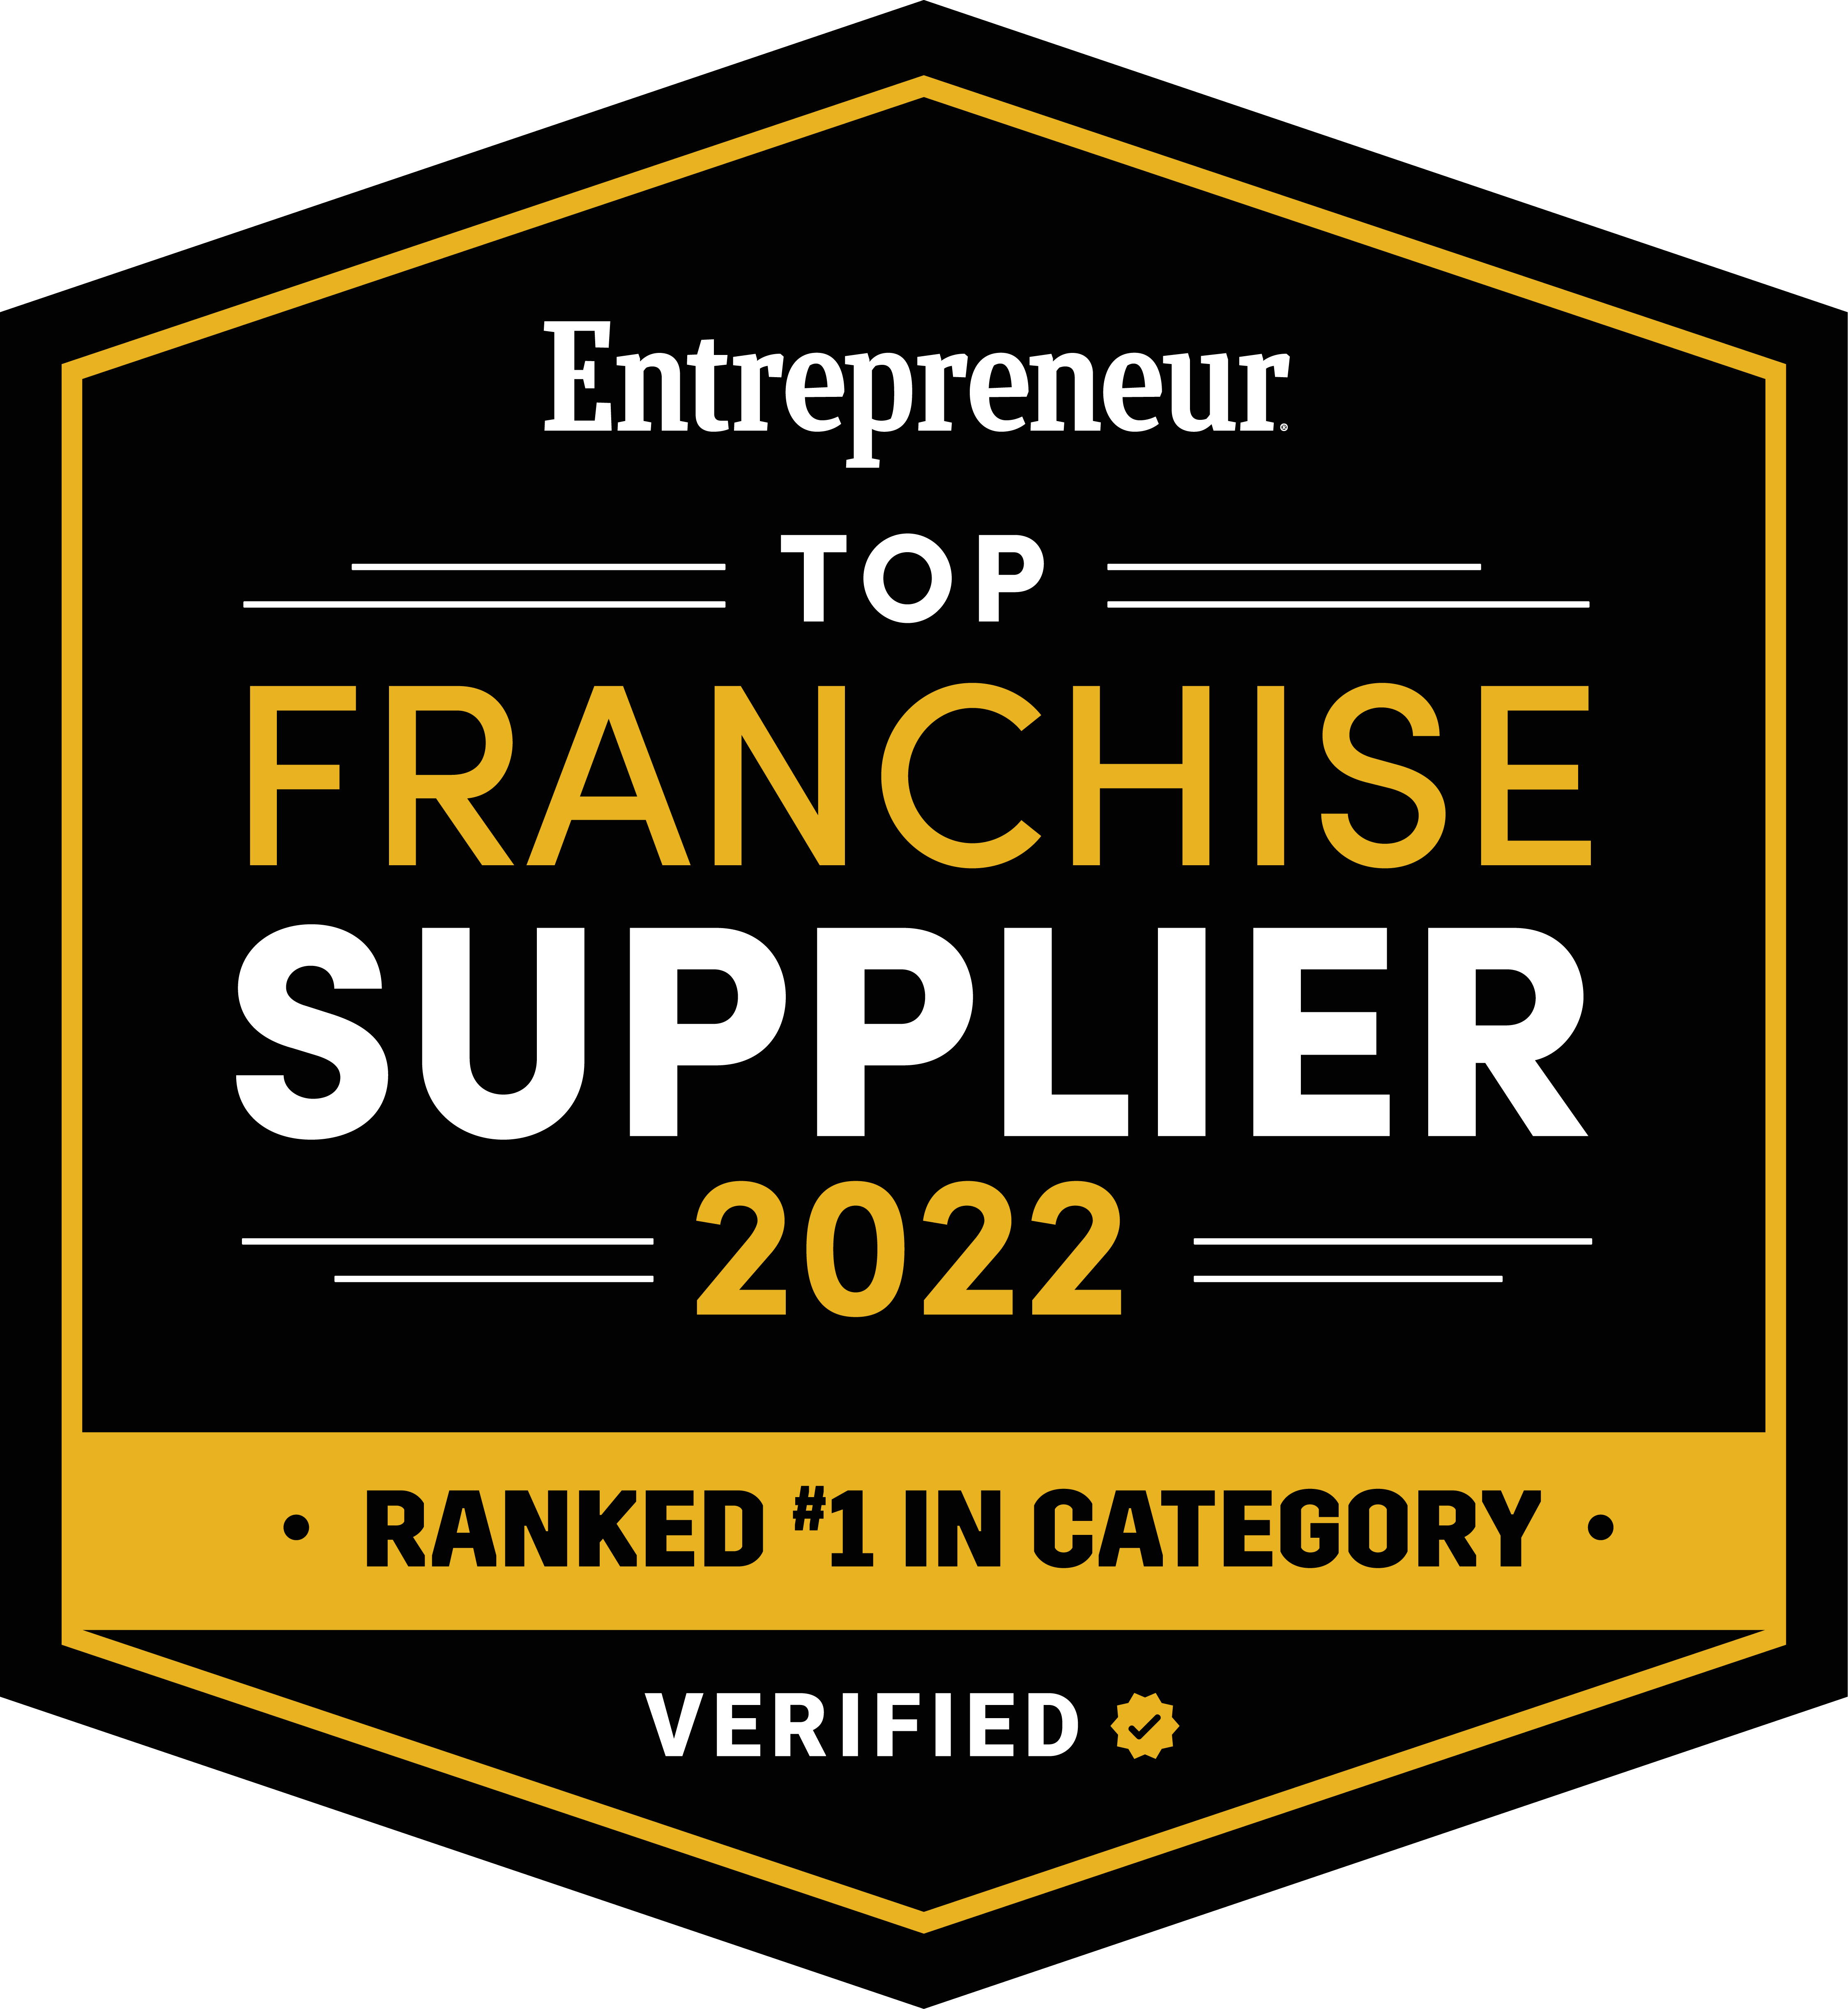 Entrepreneur Top Franchise Supplier 2022